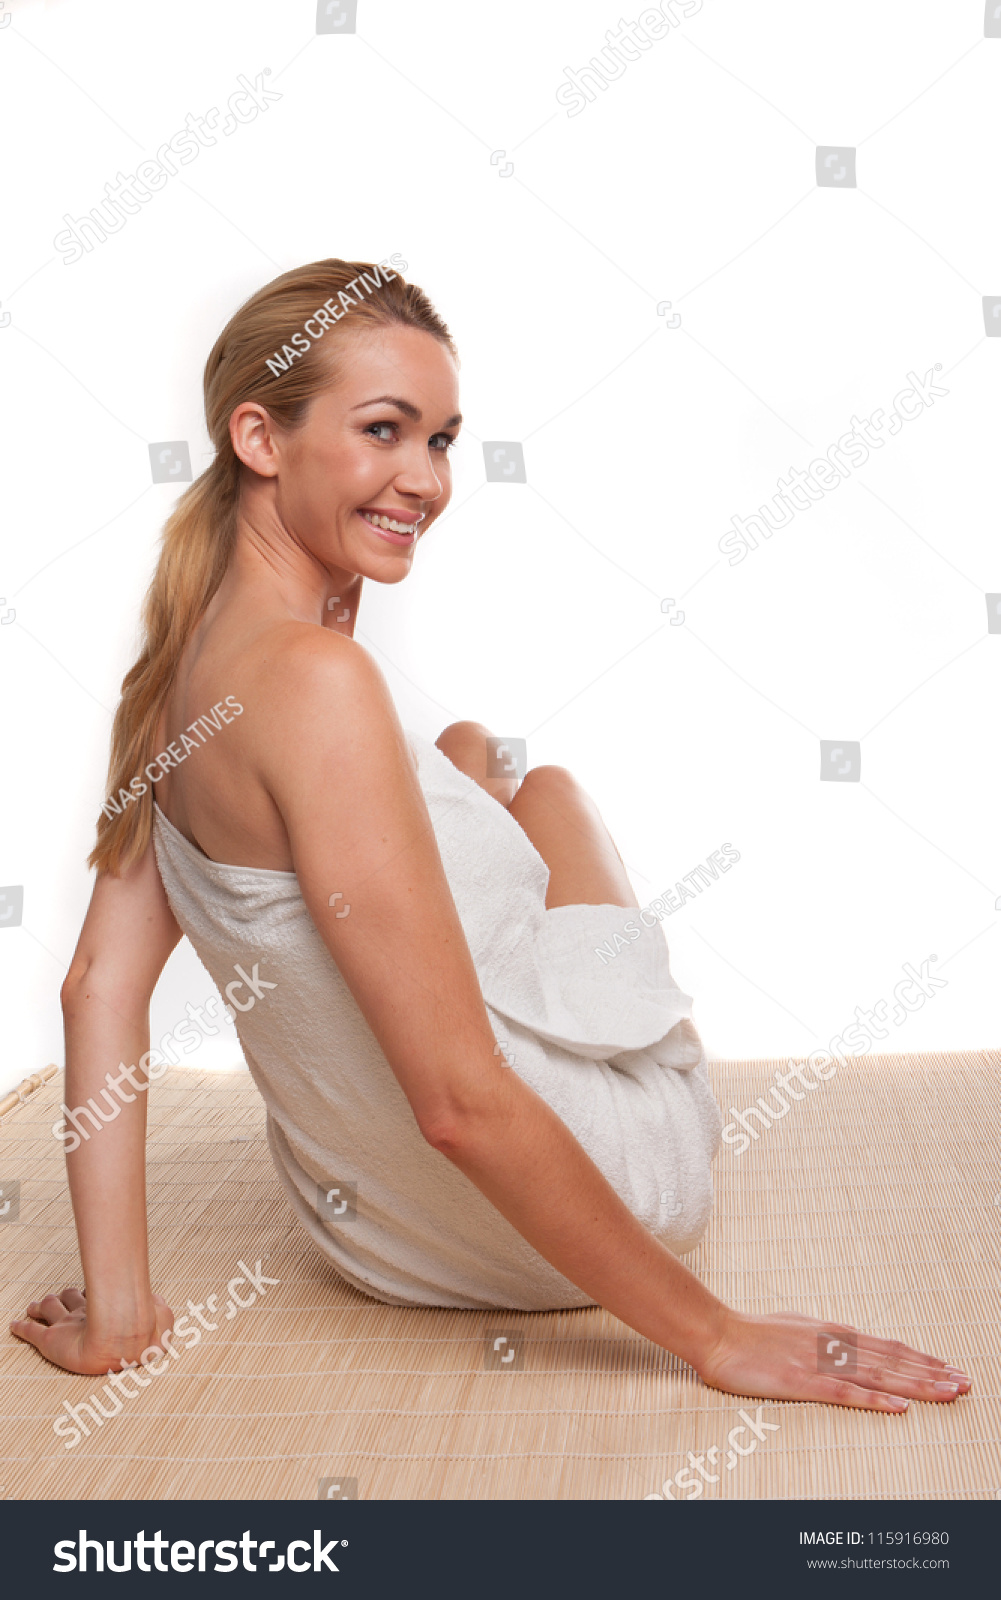 Woman Sitting w/ Towel #1558 